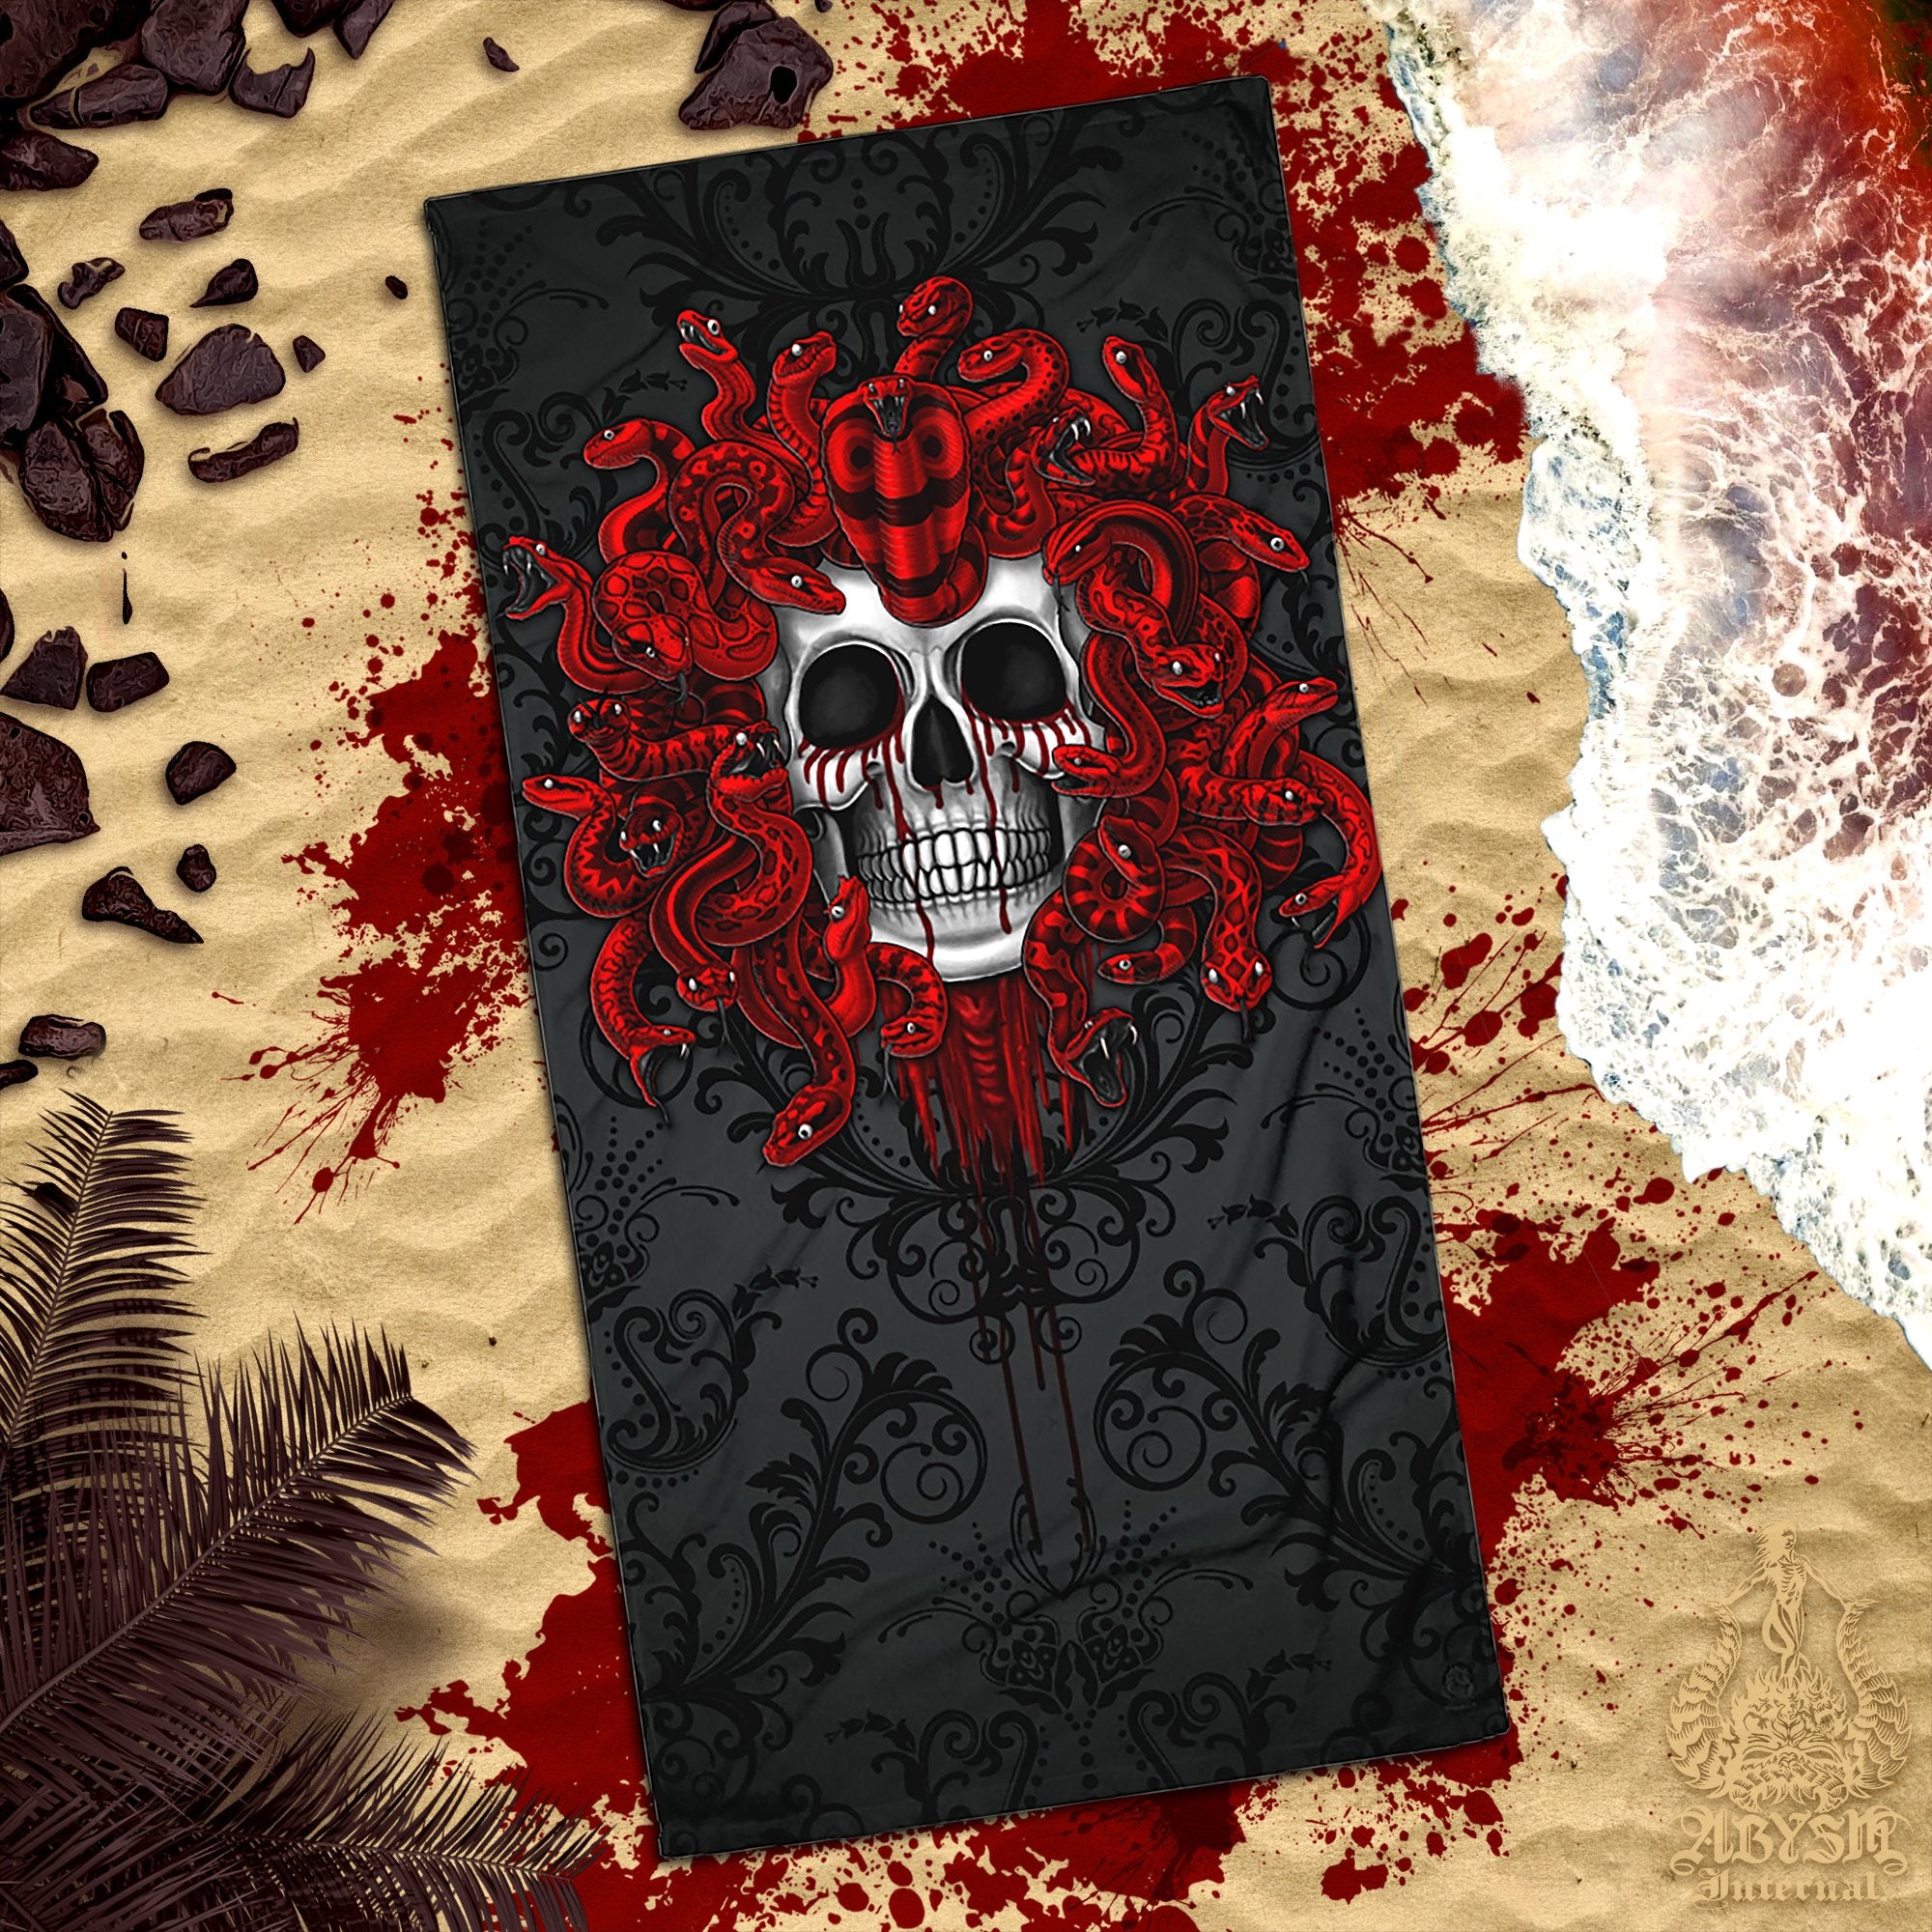 Gothic Medusa Beach Towel, Nu Goth Skull Art - 2 Faces, 3 Snake Colors, Black & White - Abysm Internal